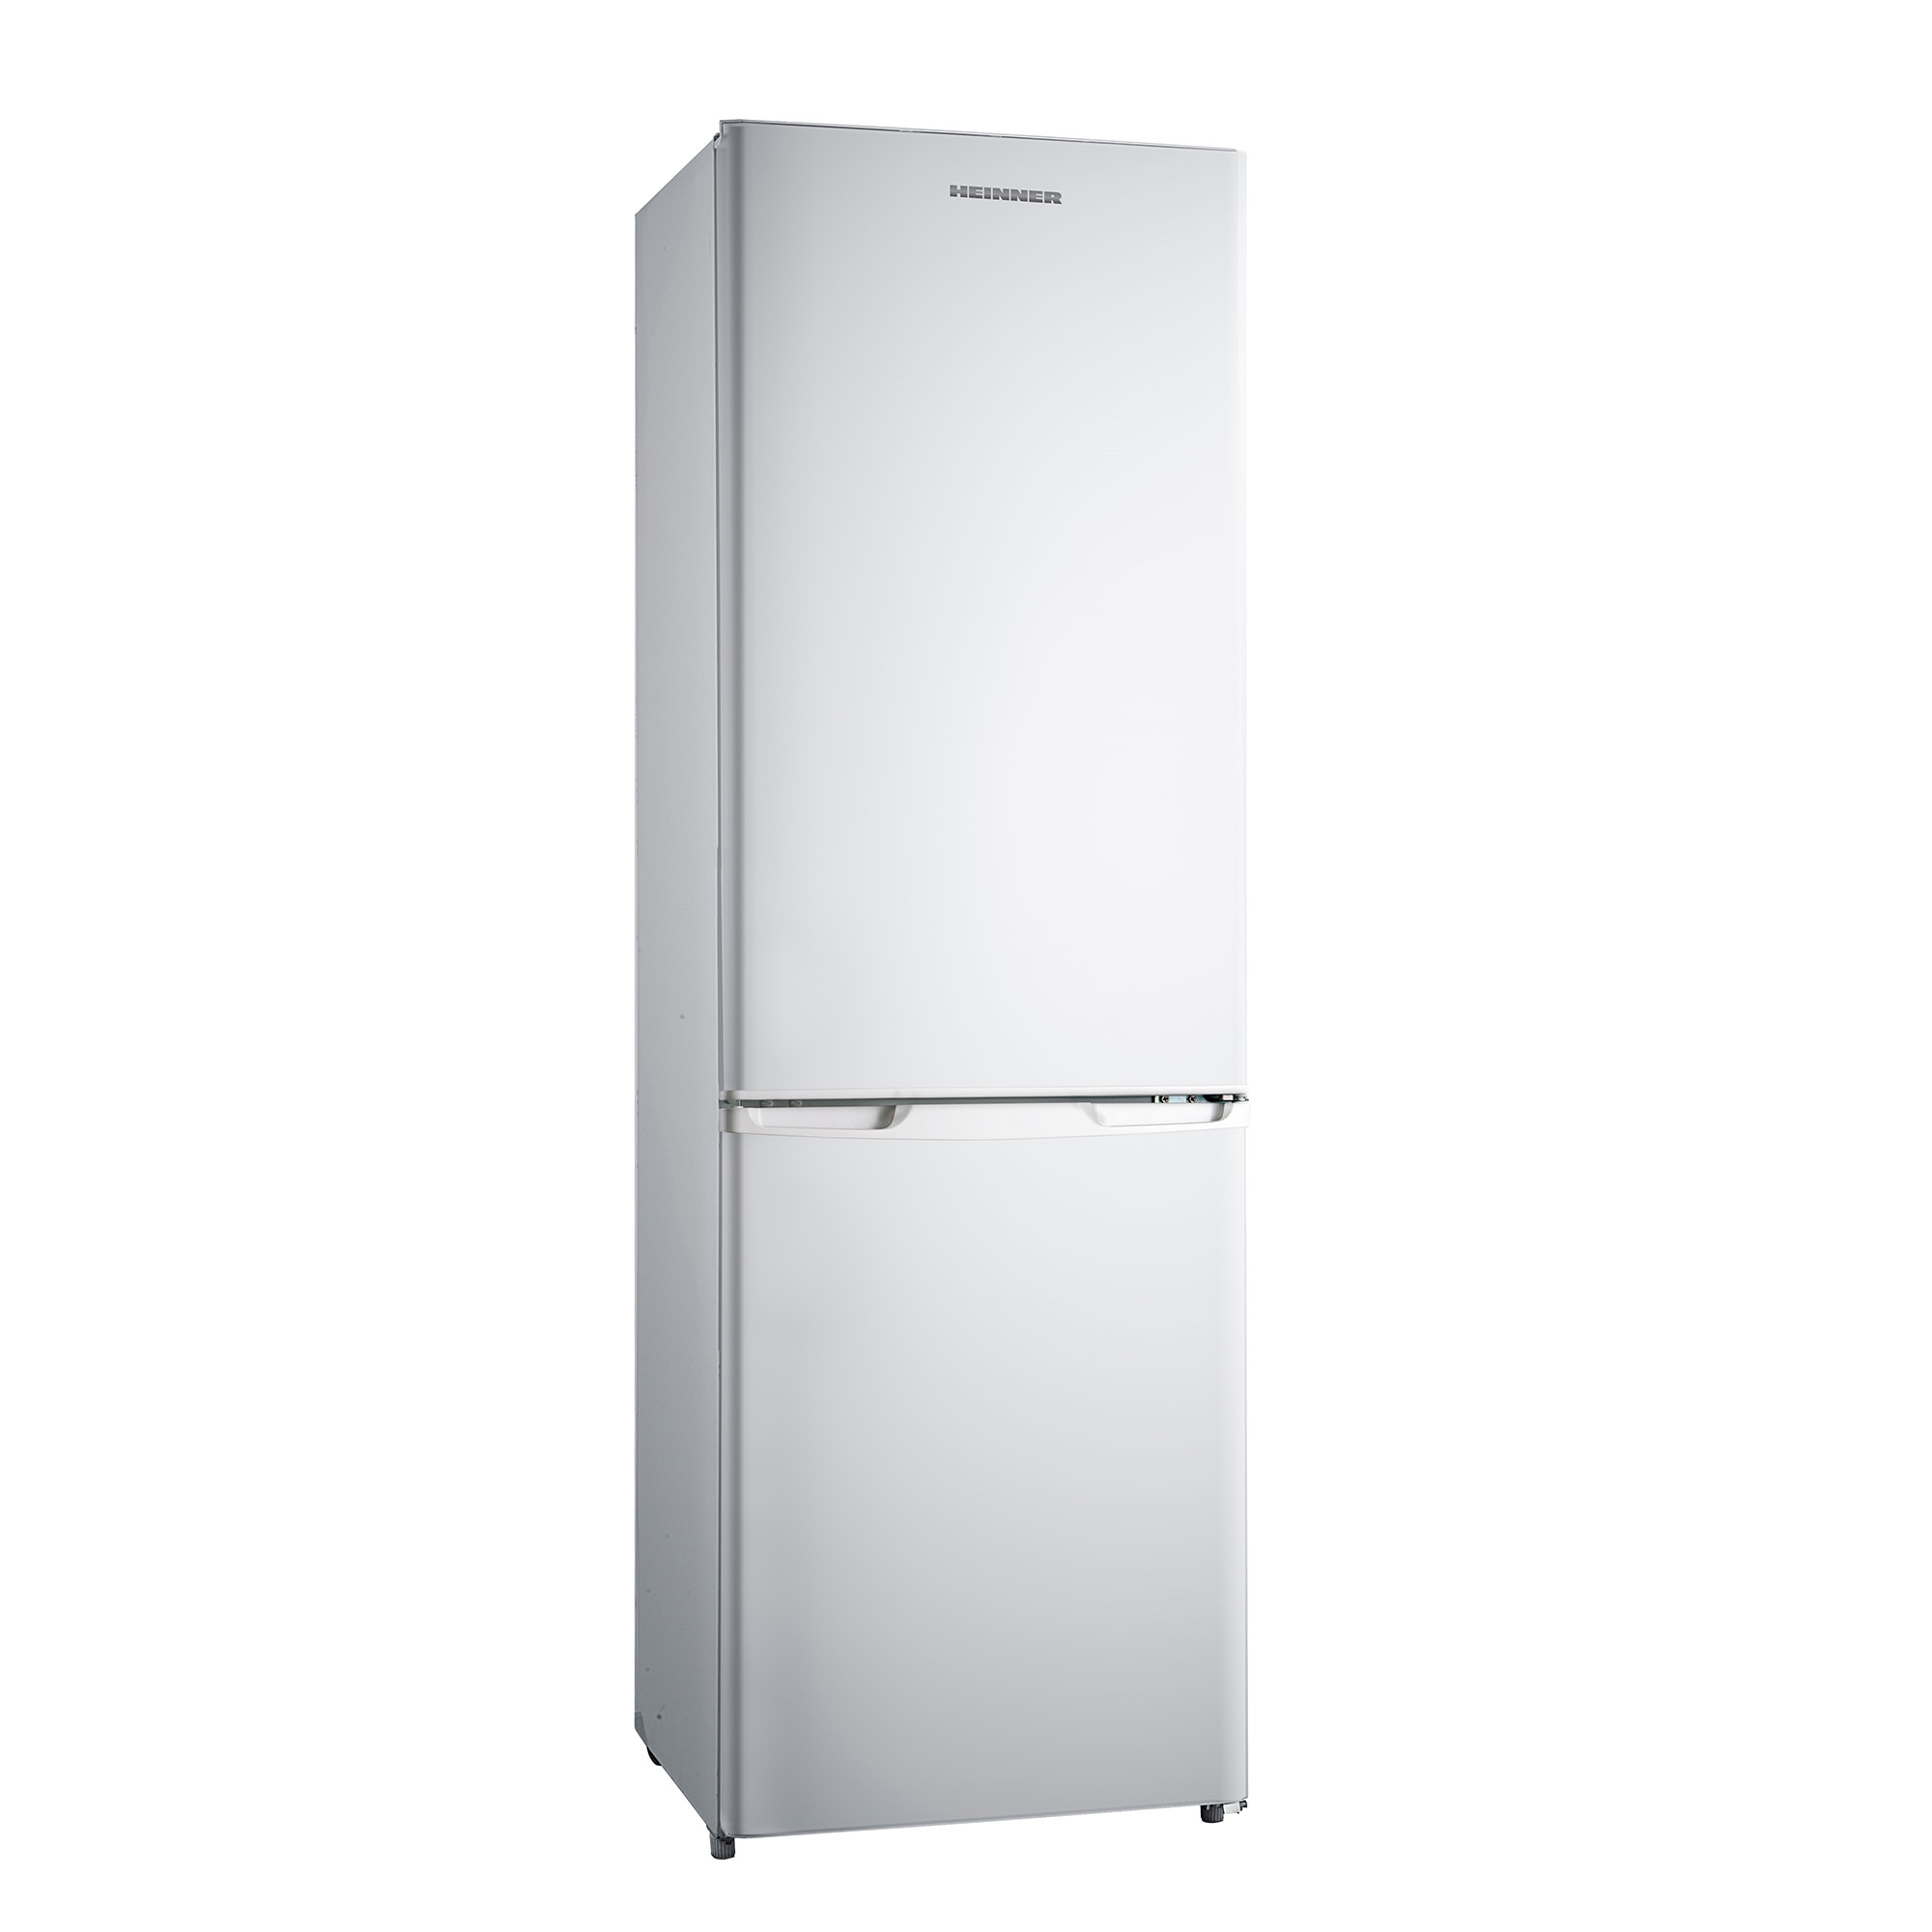 Хладилник Heinner HC-290A+ с обем от 288 л.